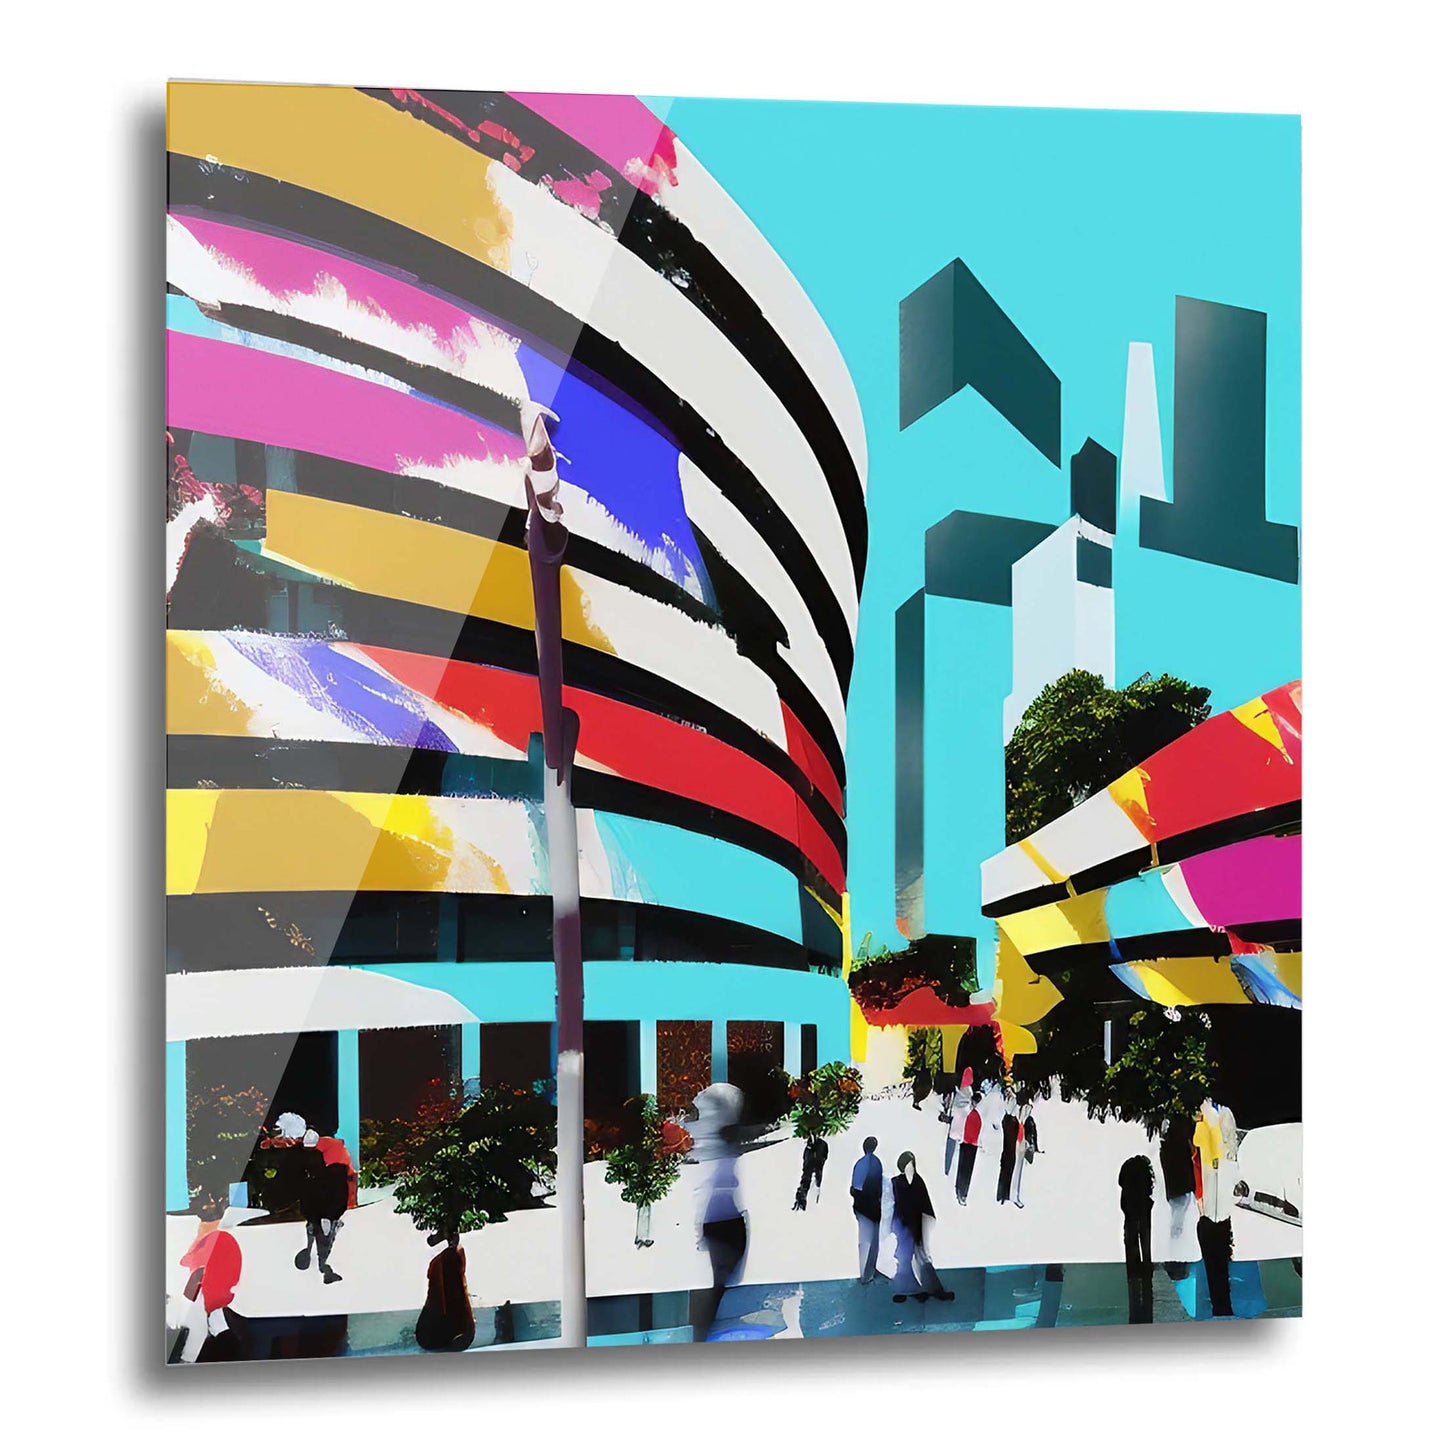 New York Guggenheim Museum - mural in pop art style